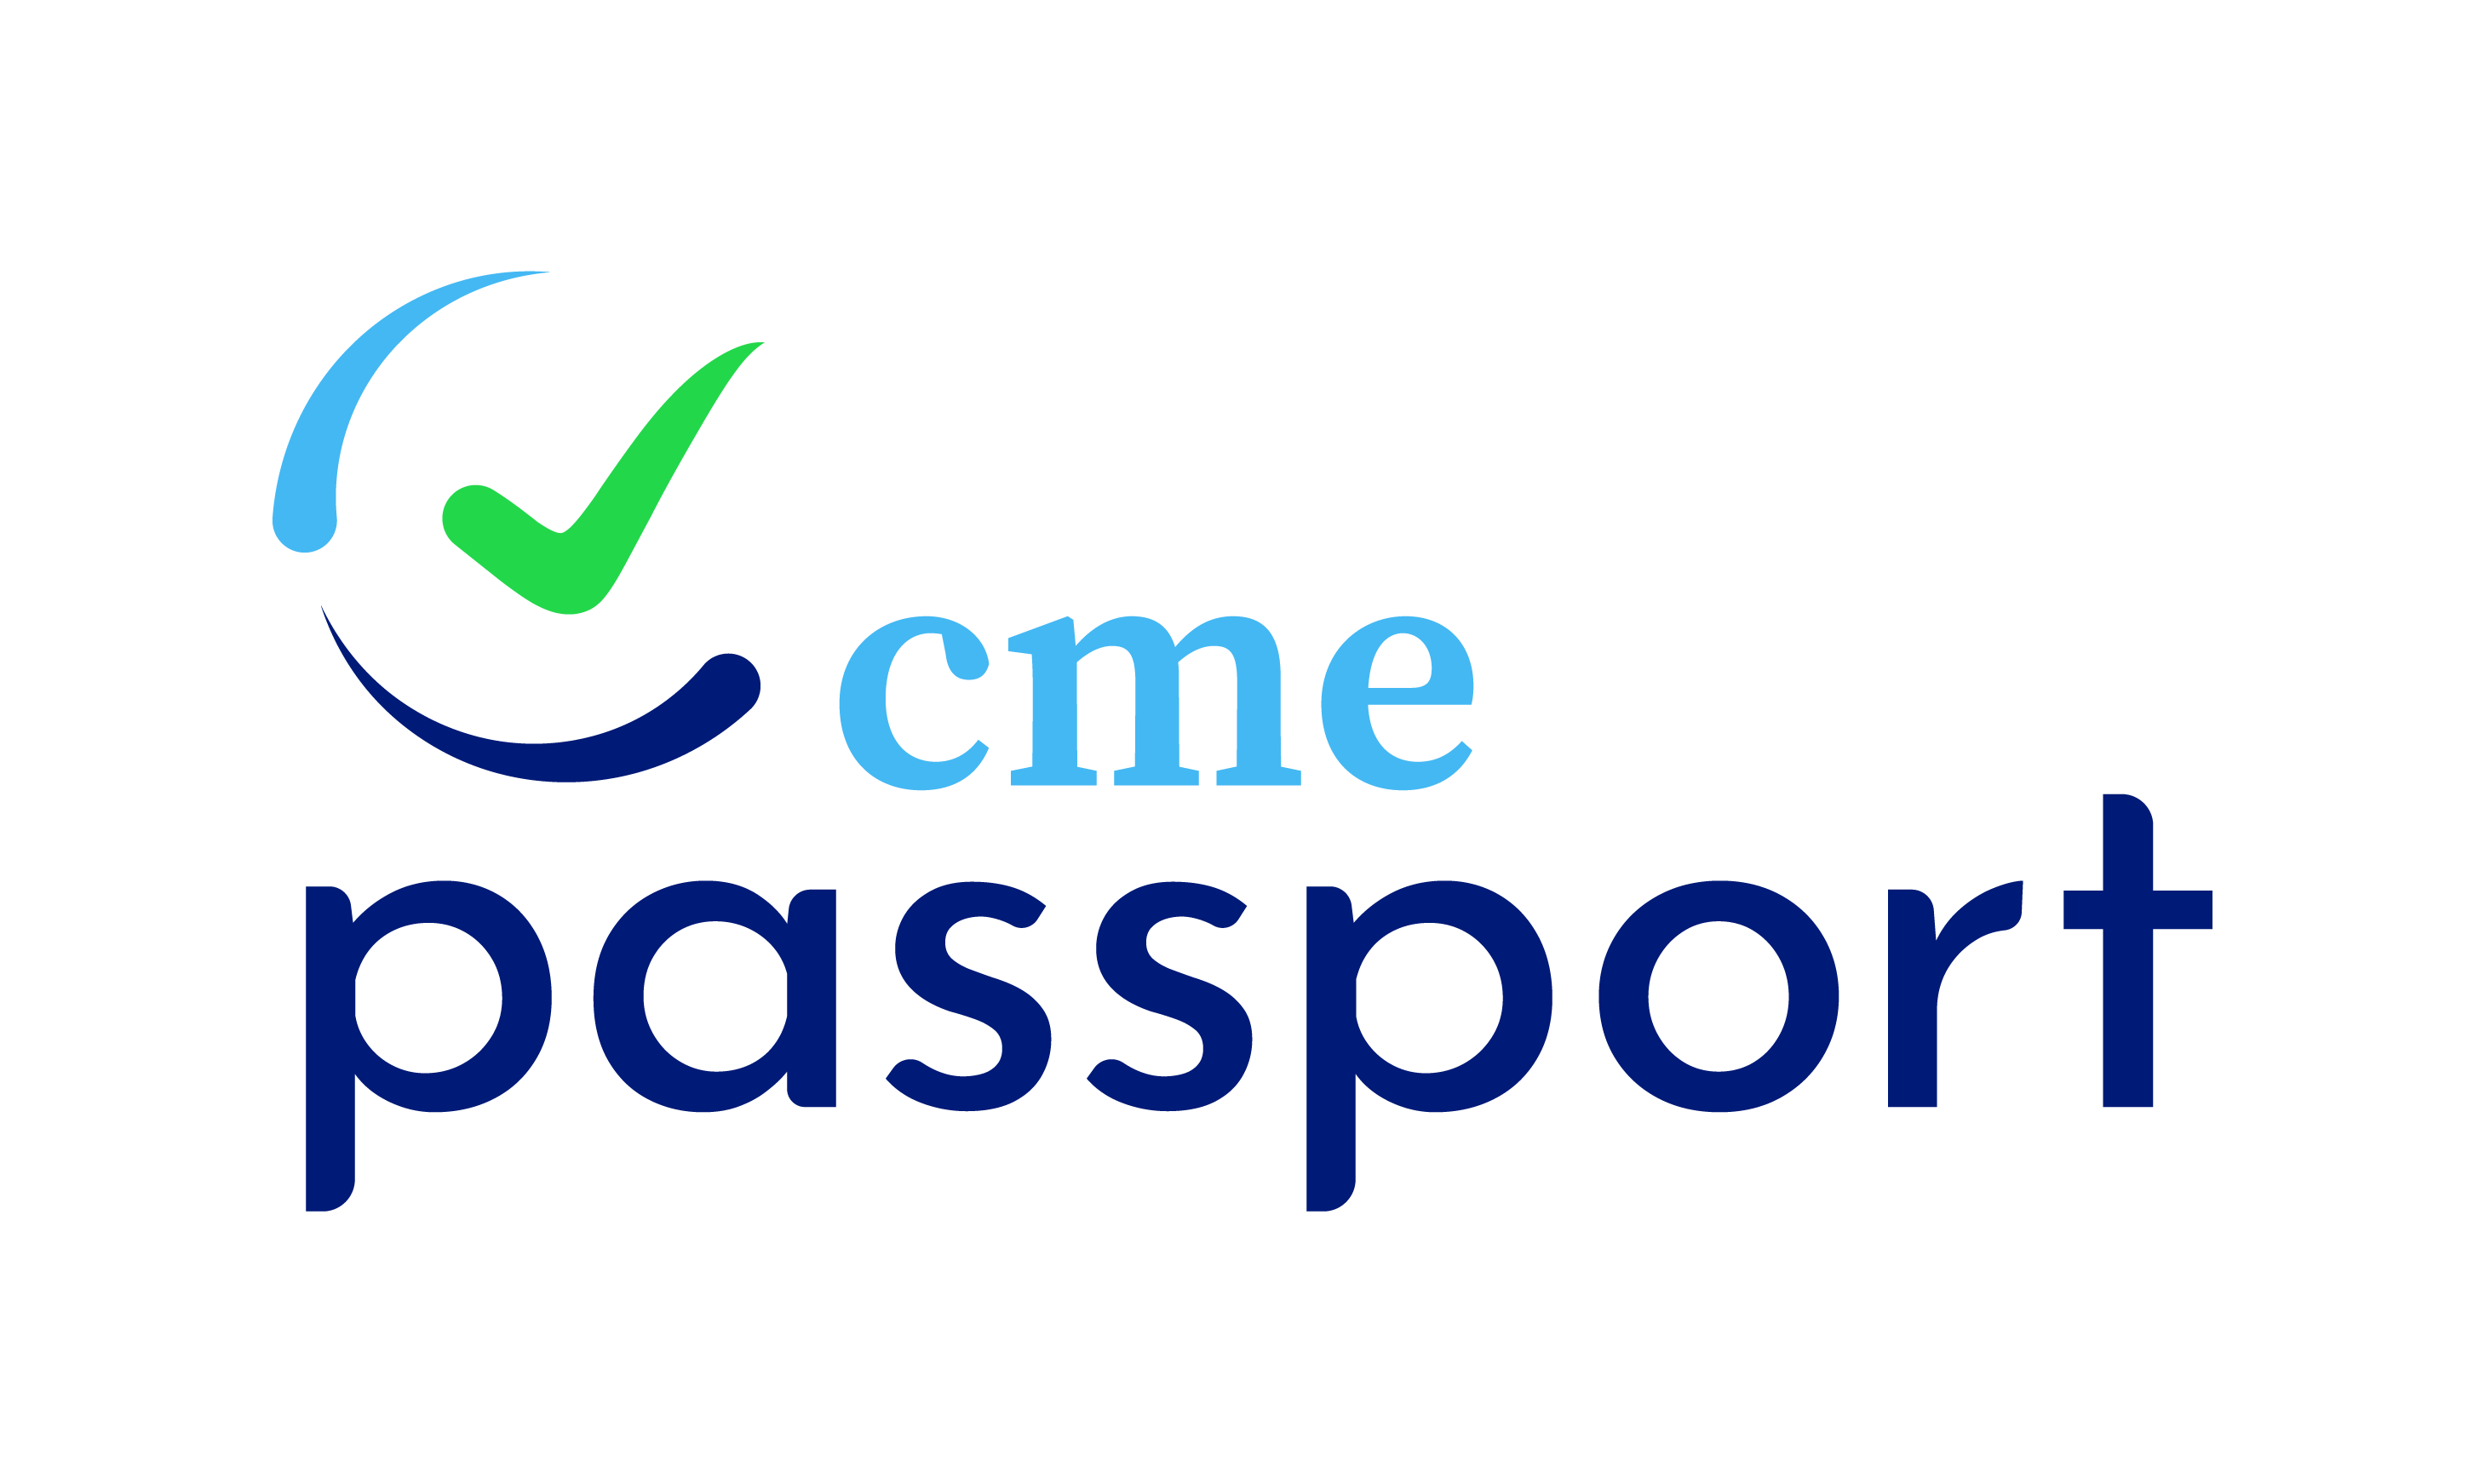 CME Passport Logo